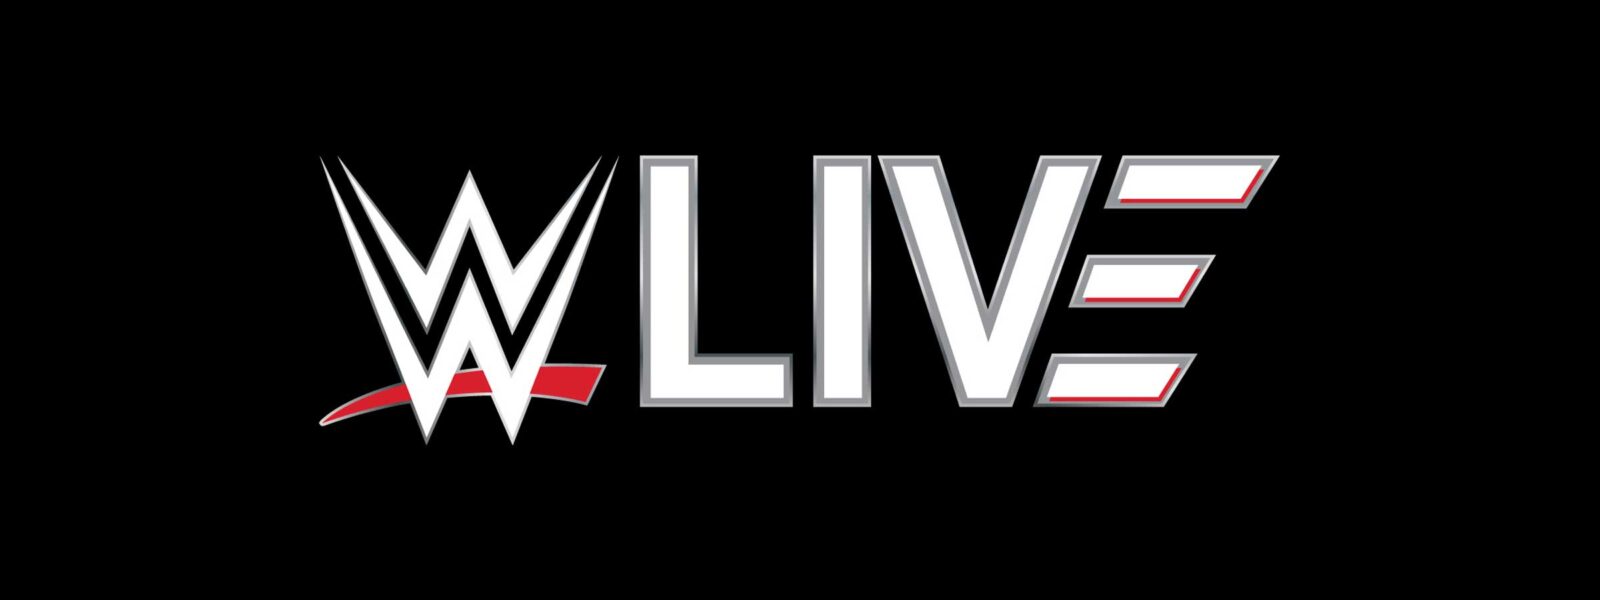 WWE LiveWWE®  presented by TEG Dainty